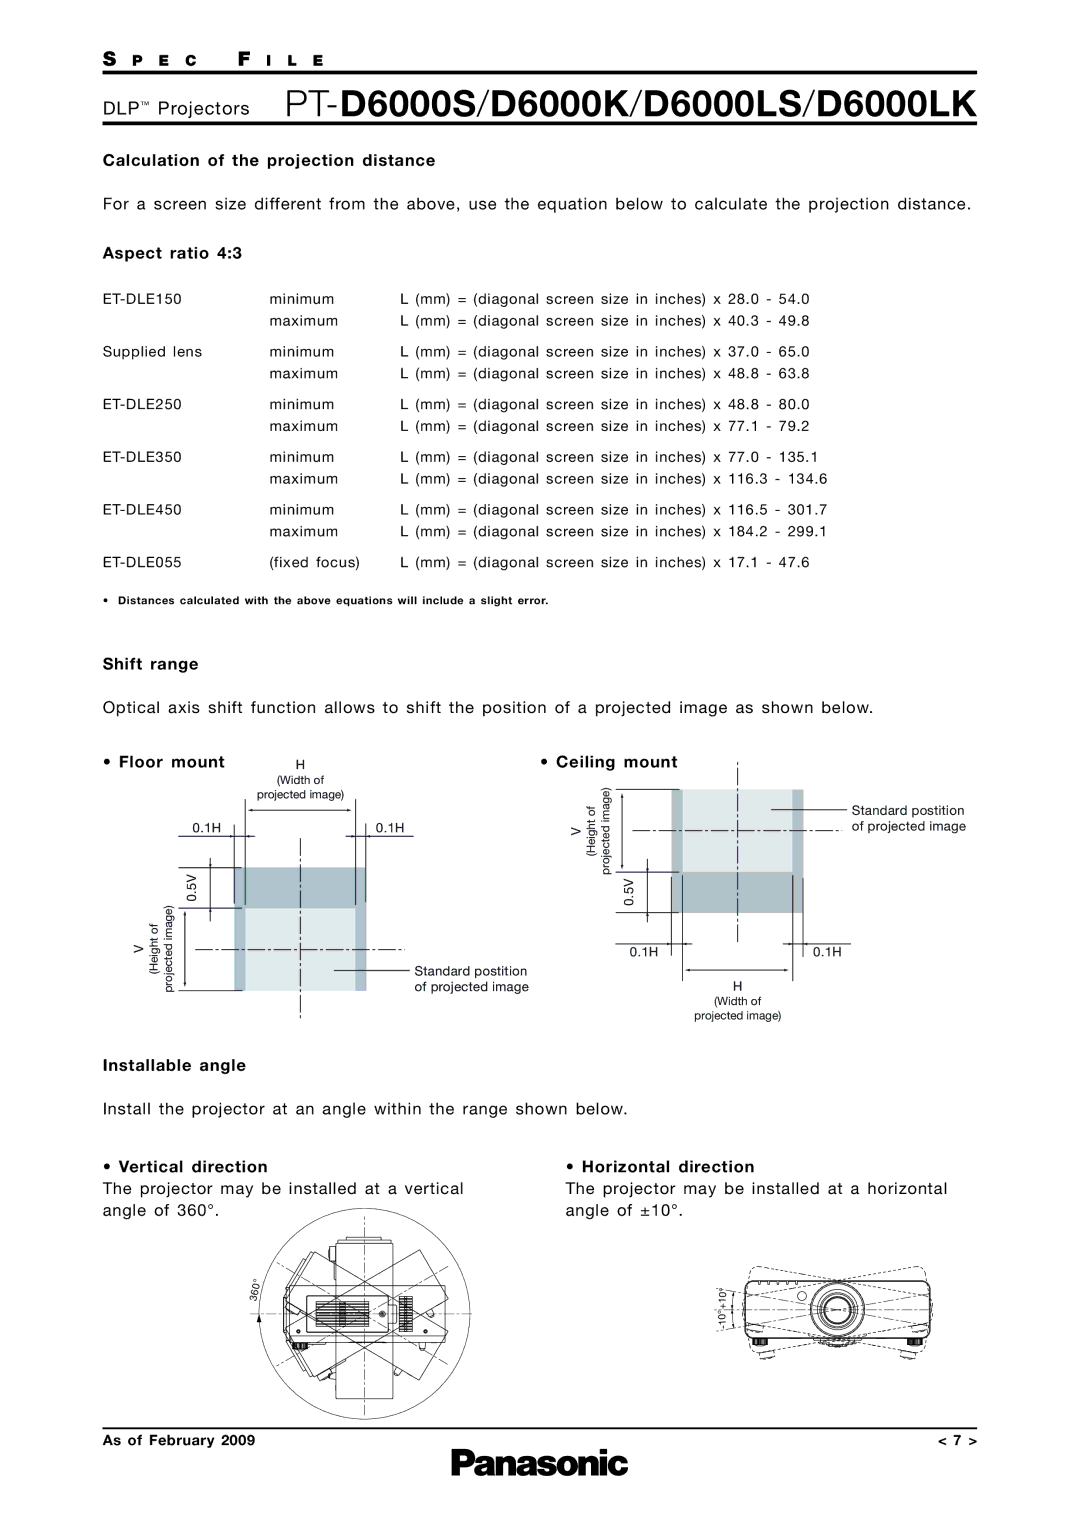 Panasonic PT-D6000S Calculation of the projection distance, Aspect ratio, Shift range, Floor mount, Ceiling mount 